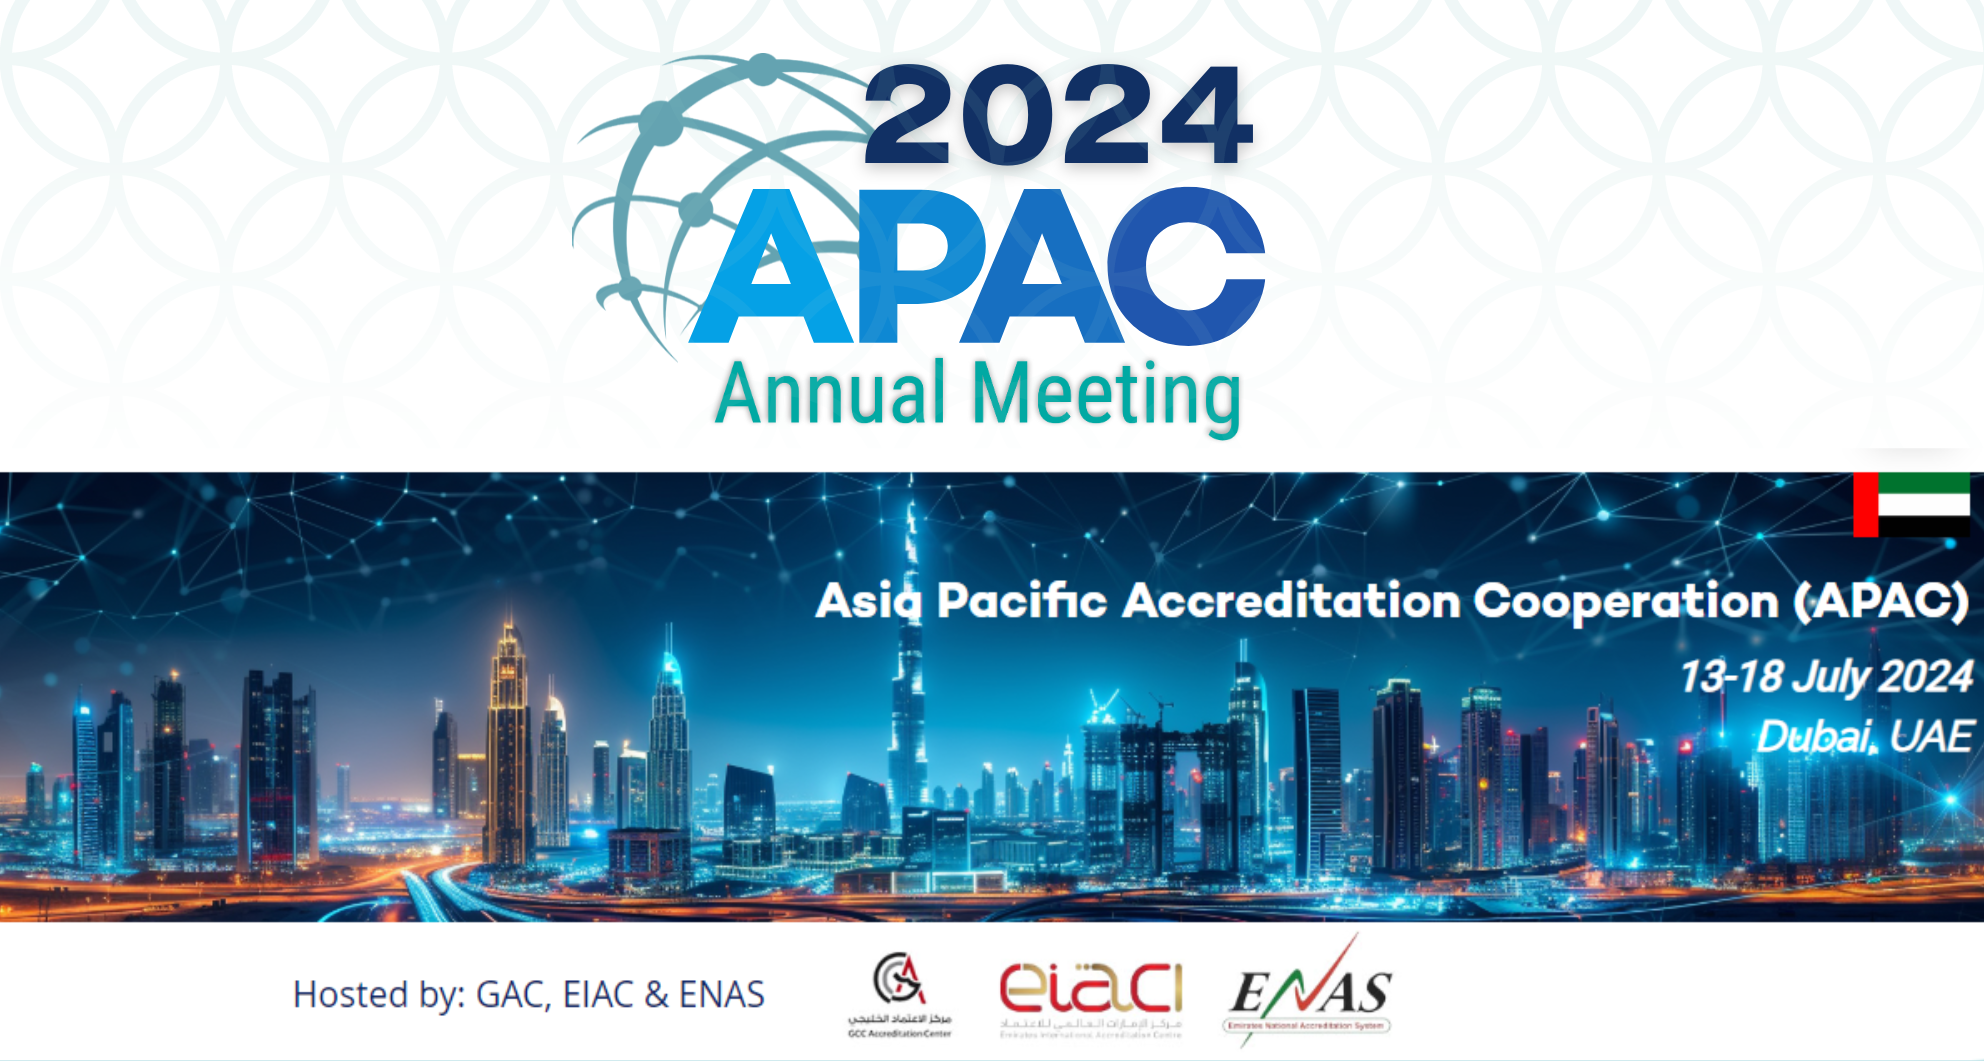 GAC to Host APAC2024 Annual Meeting in Dubai with EIAC and ENAS